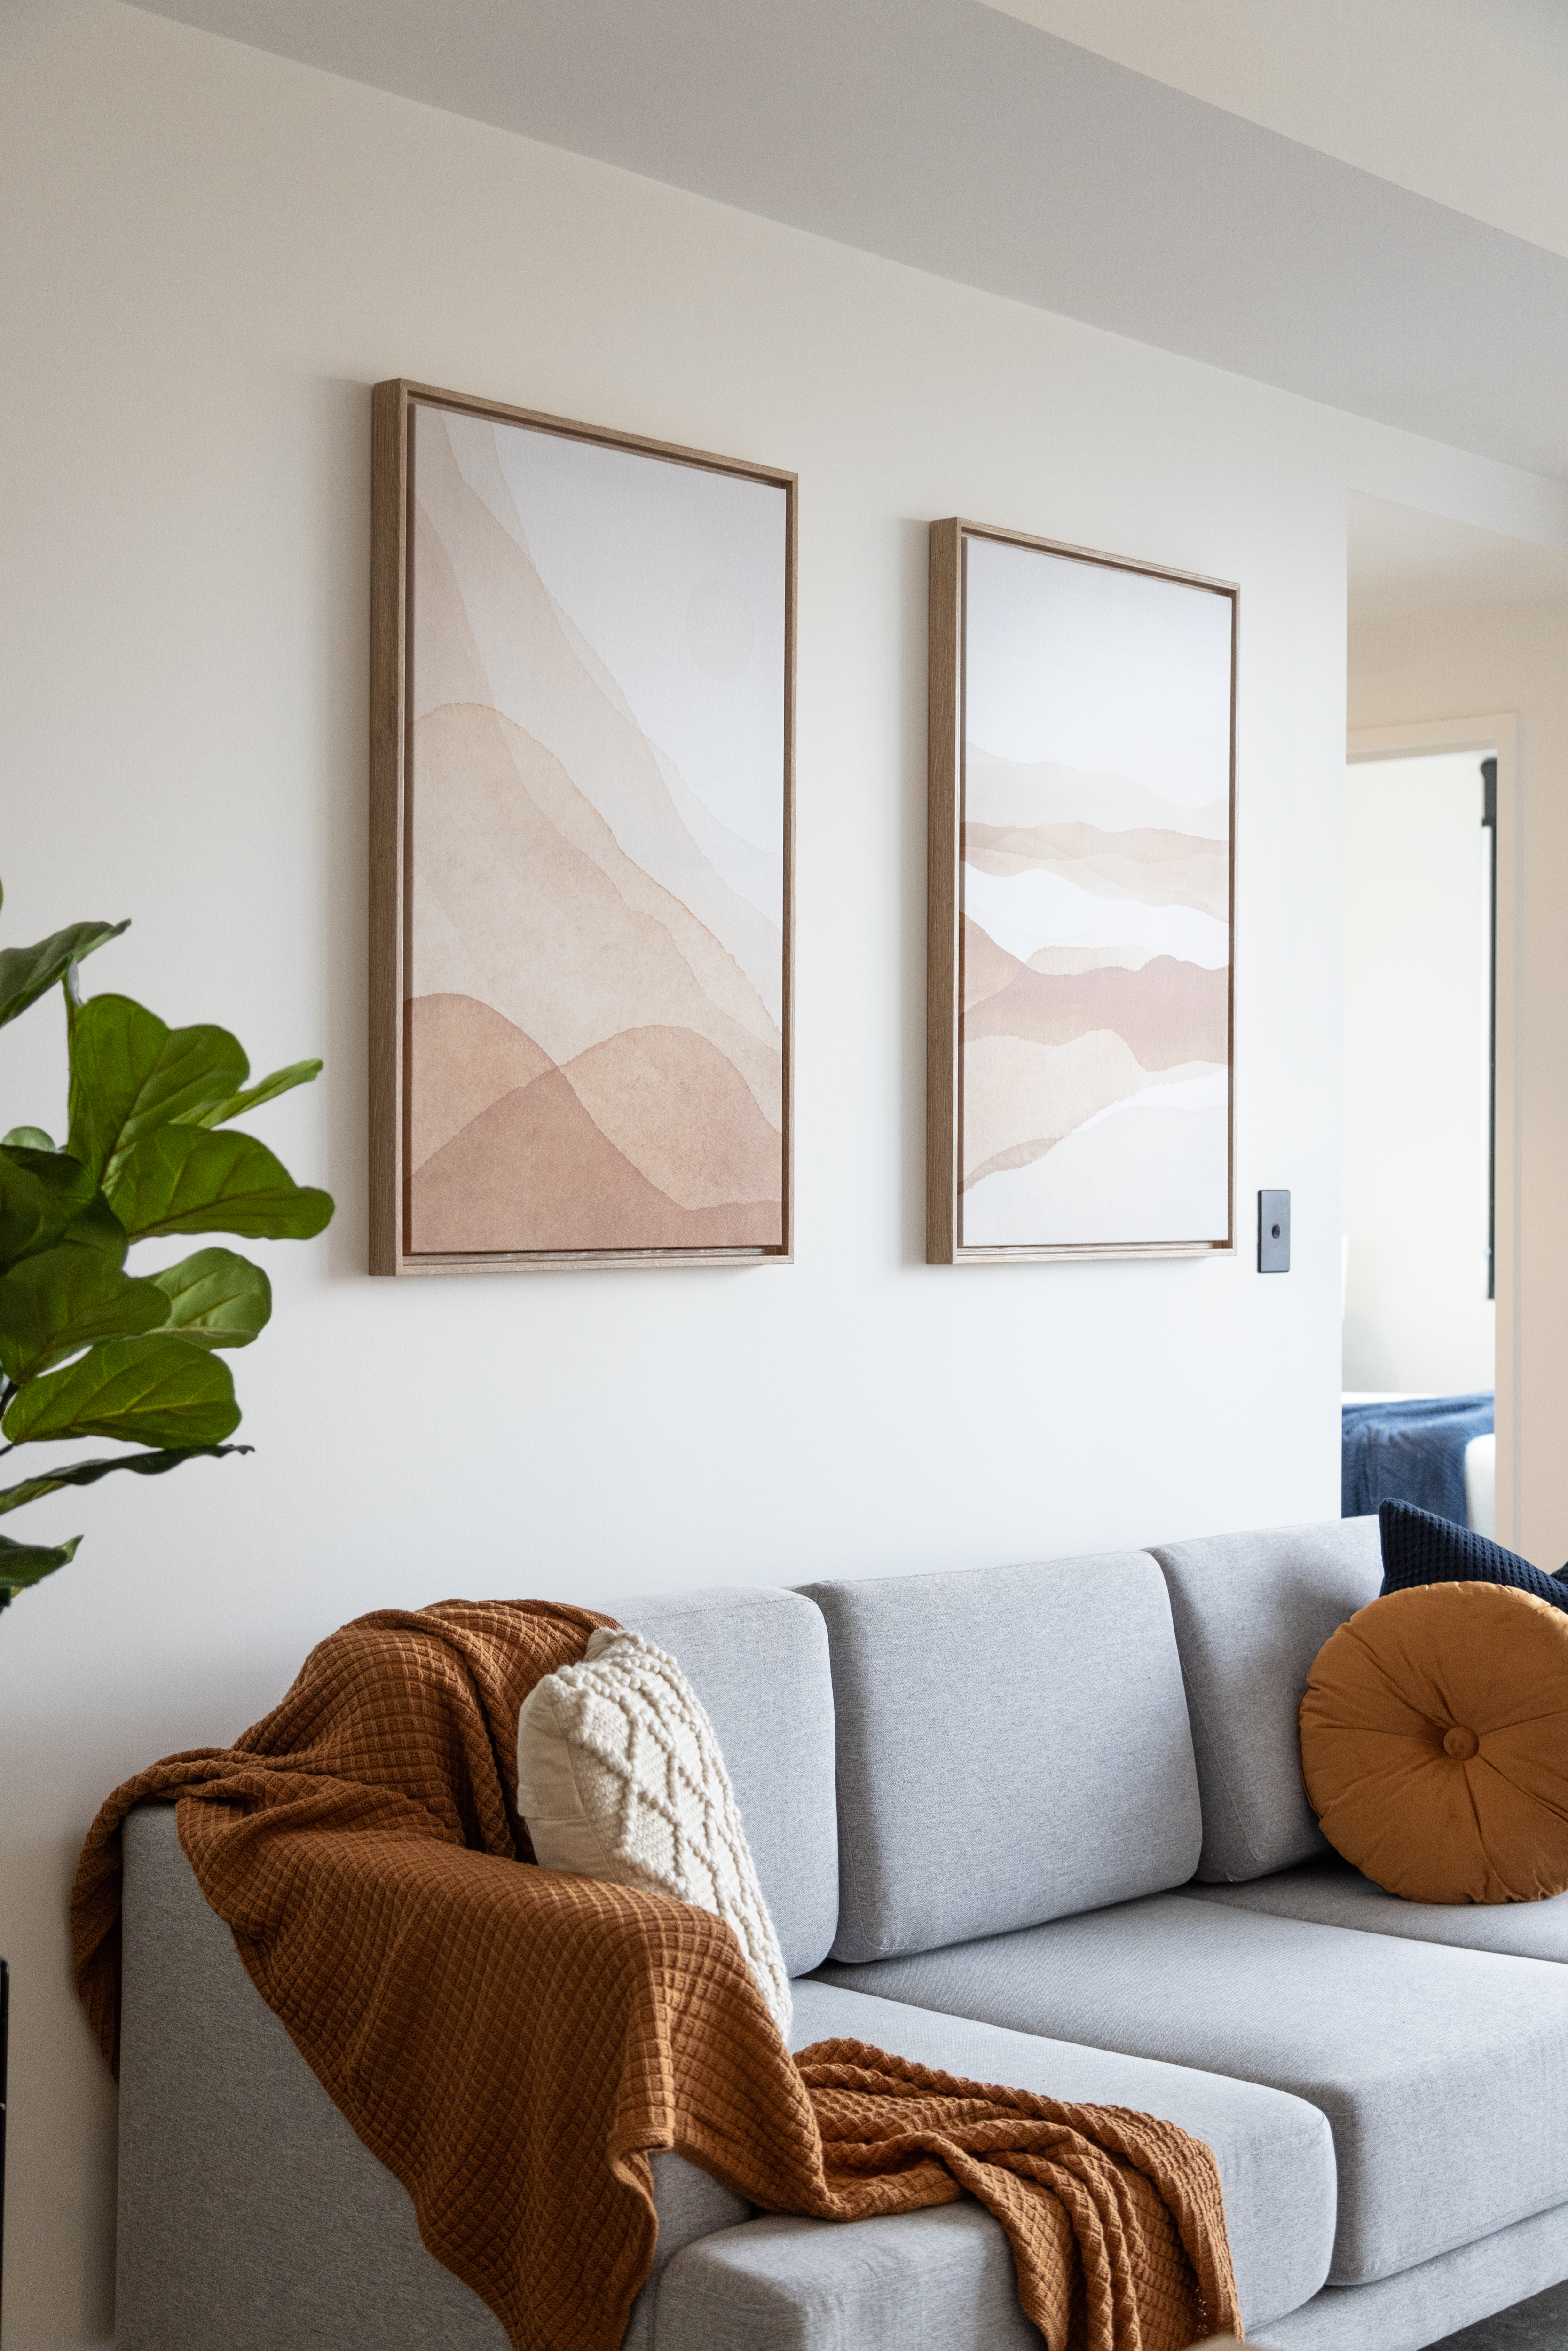 Couch - One Bedroom Superior Apartment - Urban Rest - Cinema Suites Apartments - Sydney